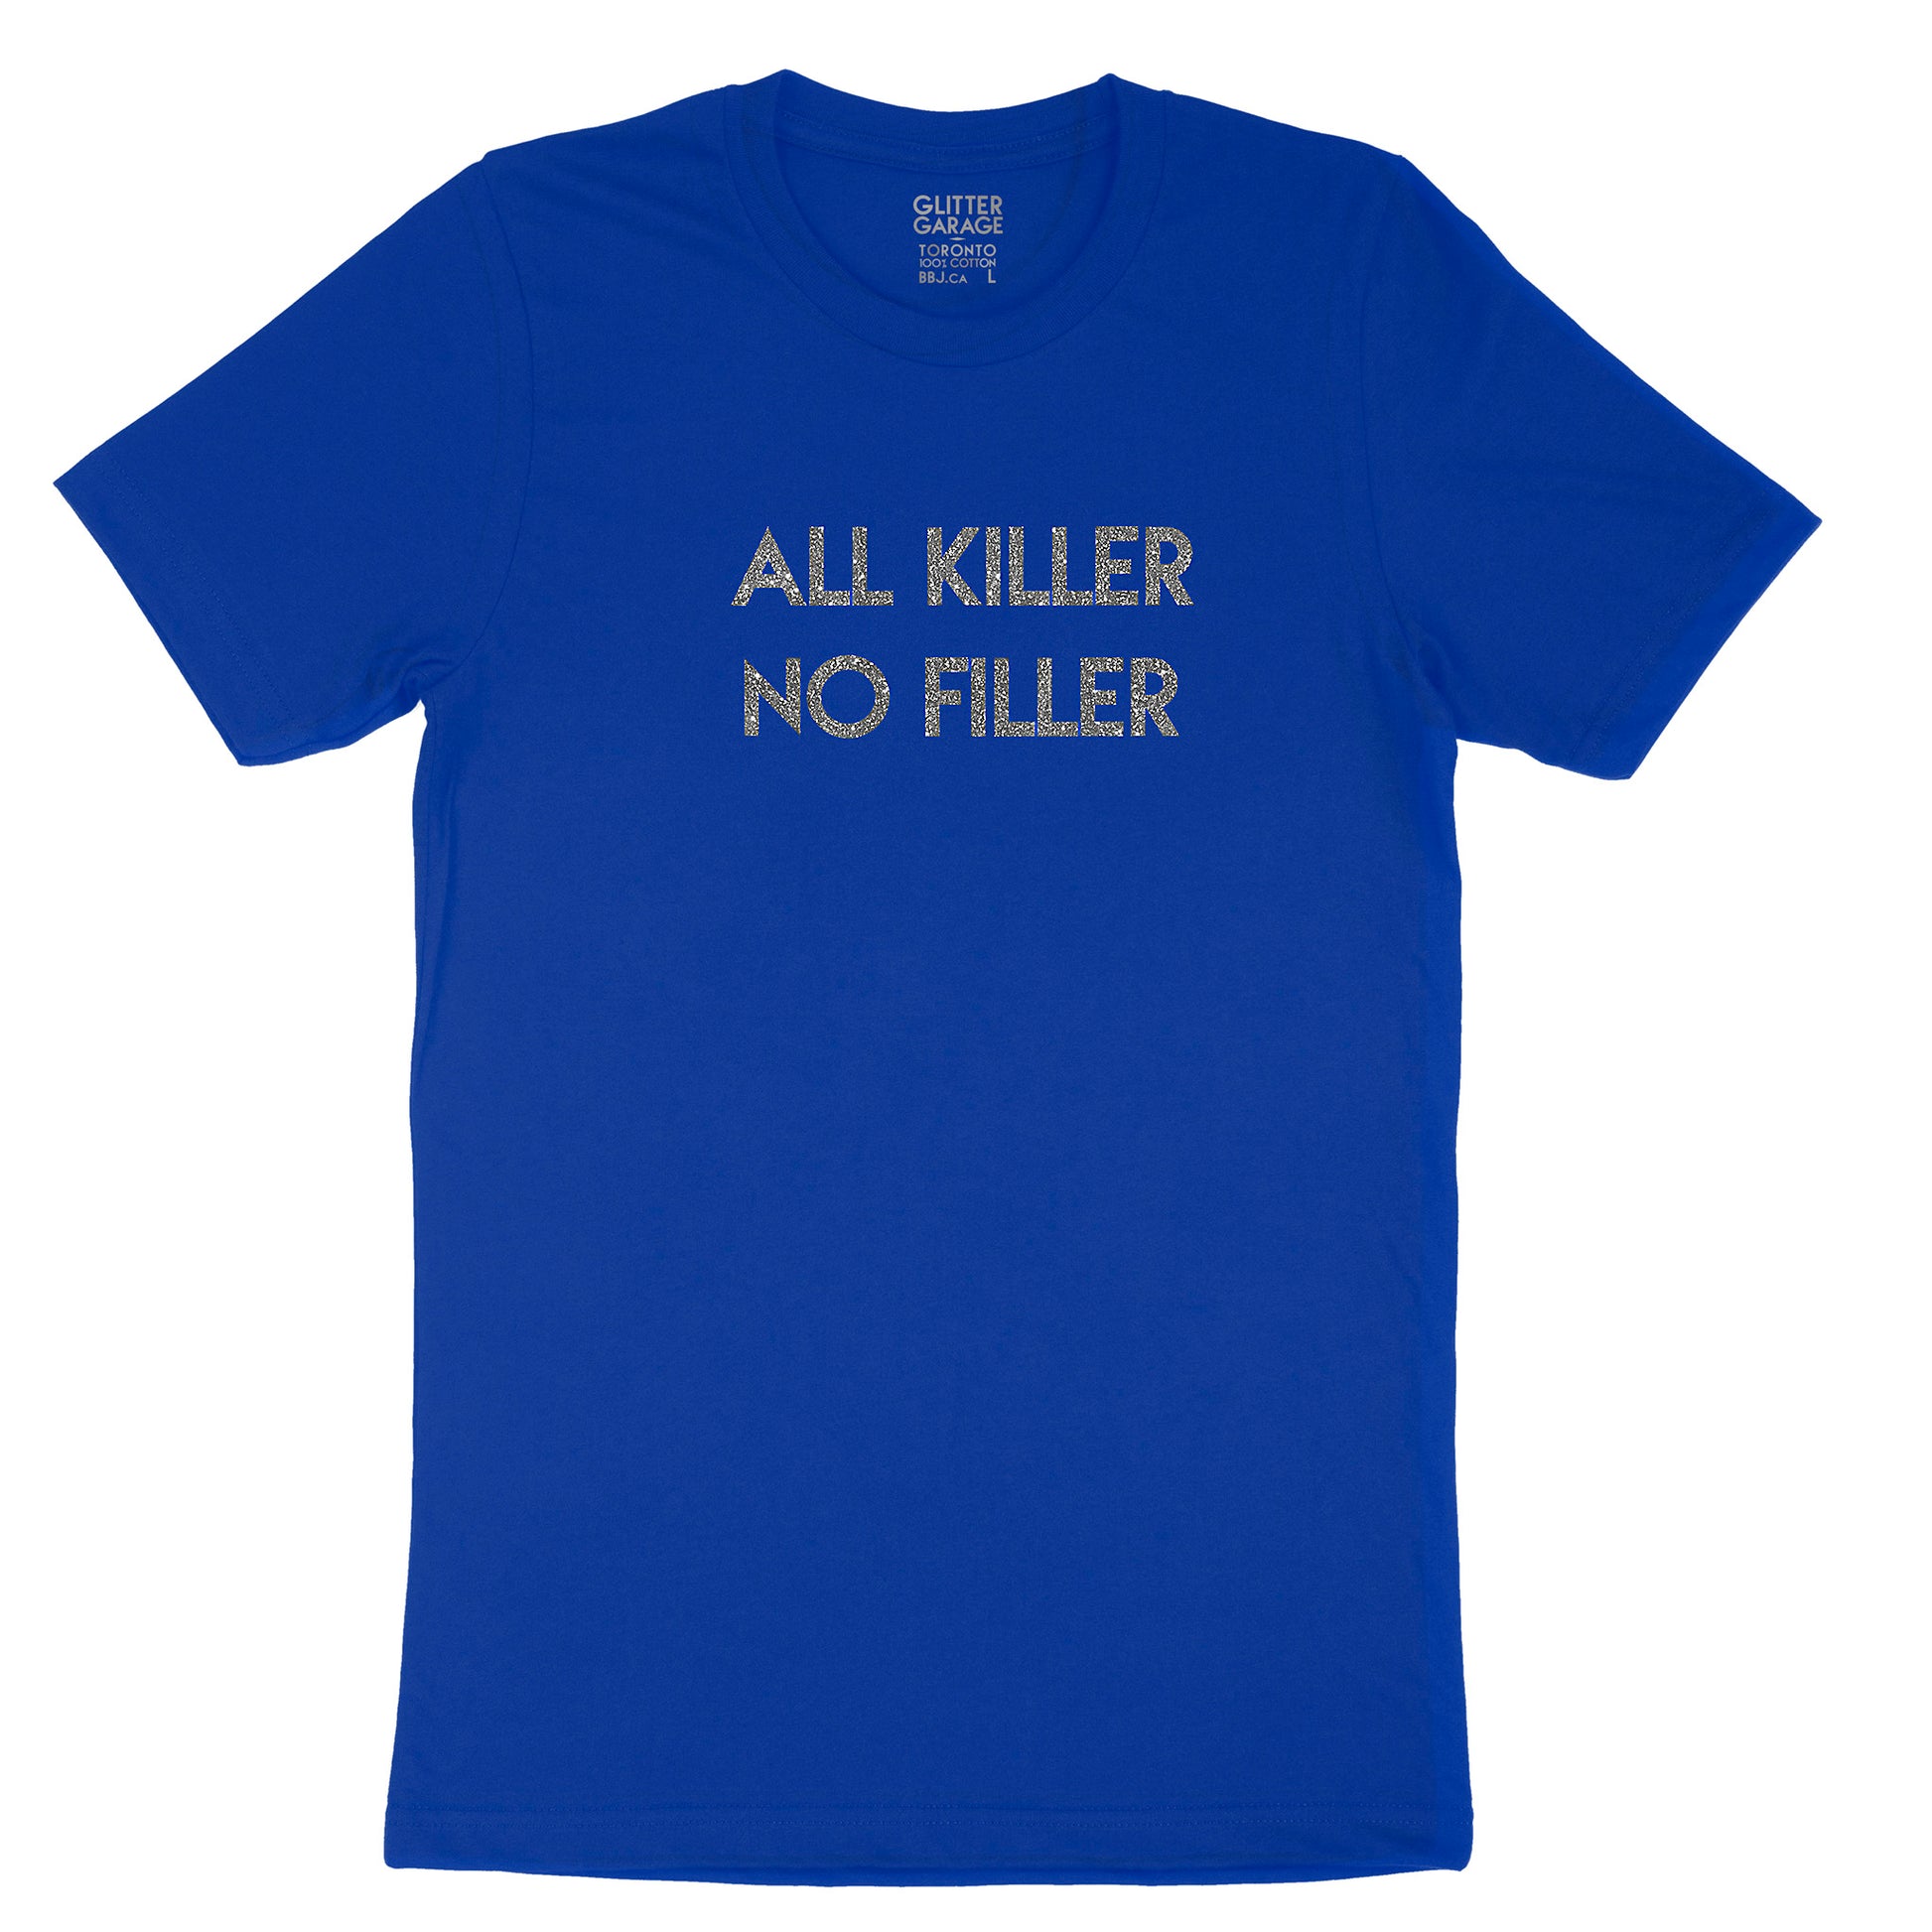 Custom text tee - All Killer No Filler - silver glitter - USE YOUR WORDS royal blue - unisex t-shirt by BBJ / Glitter Garage